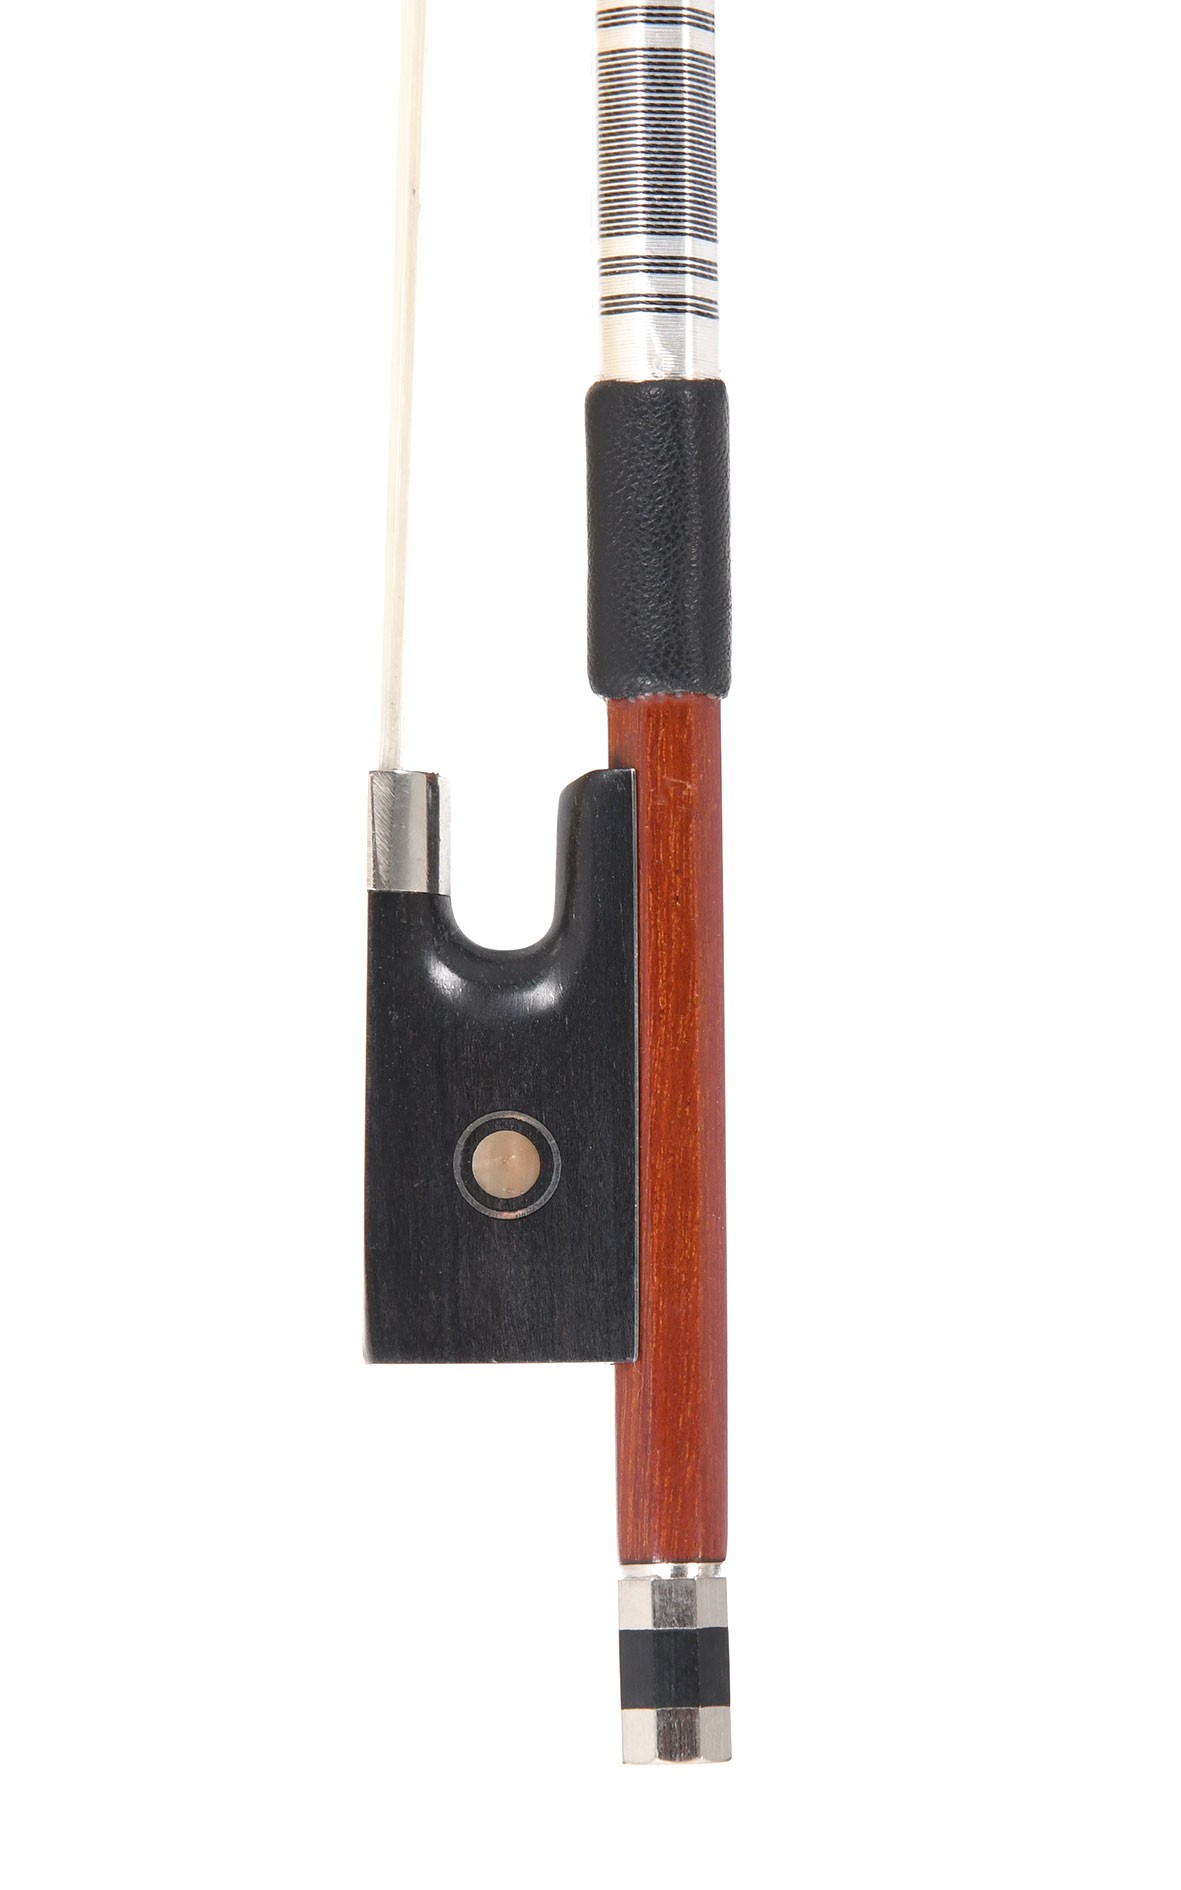 Simple violin bow of the CV Selectio brand